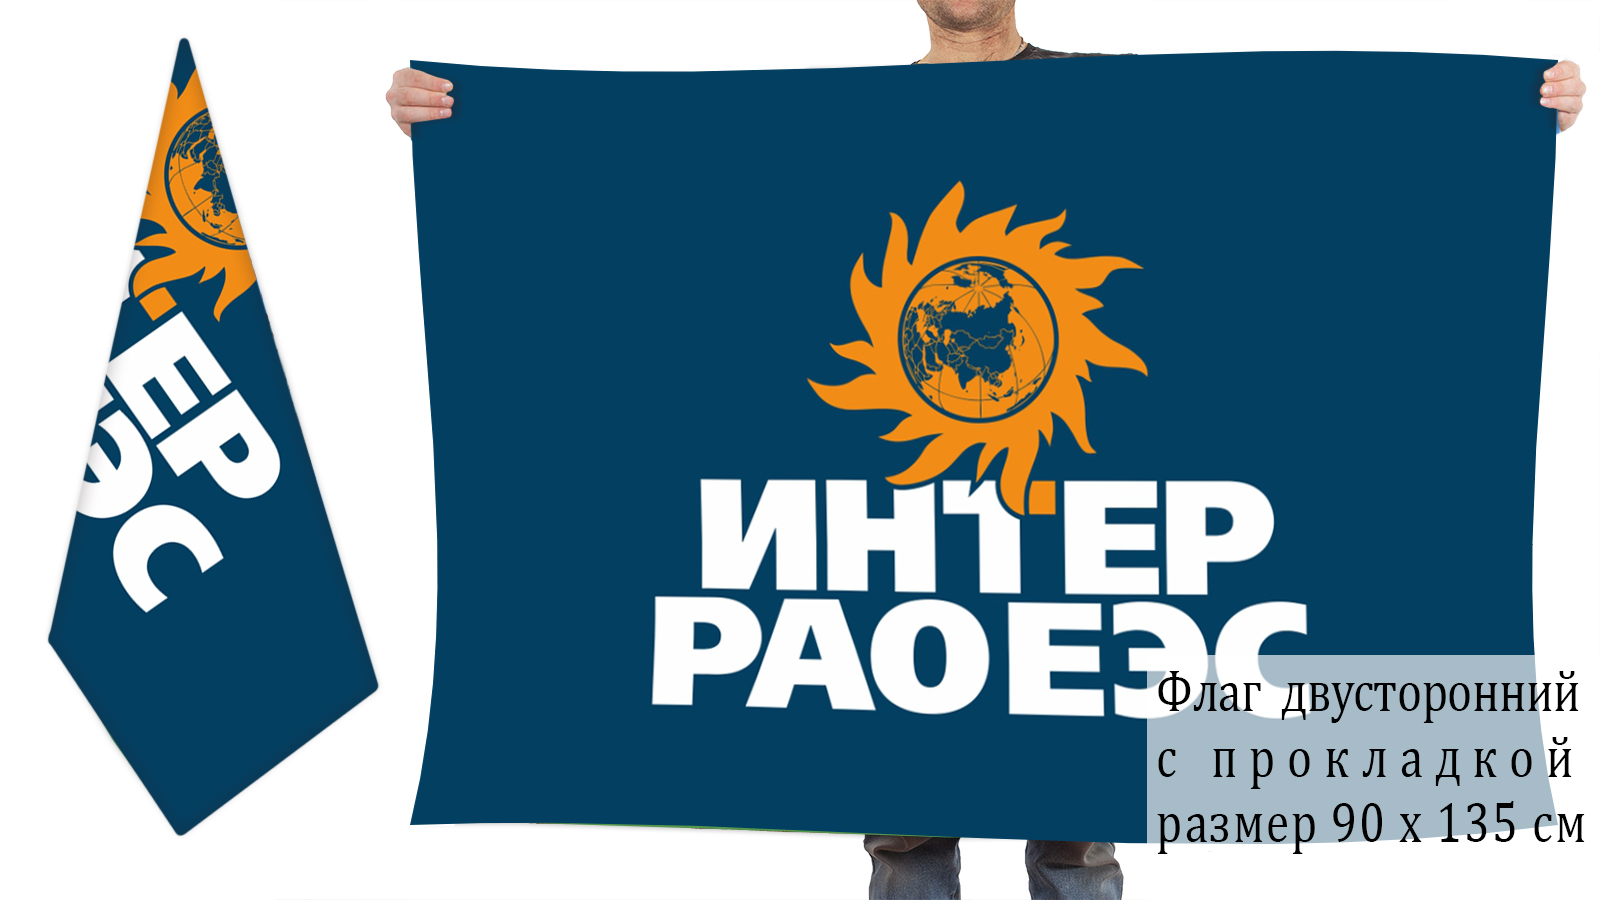 Двусторонний флаг "Интер РАО ЕЭС"